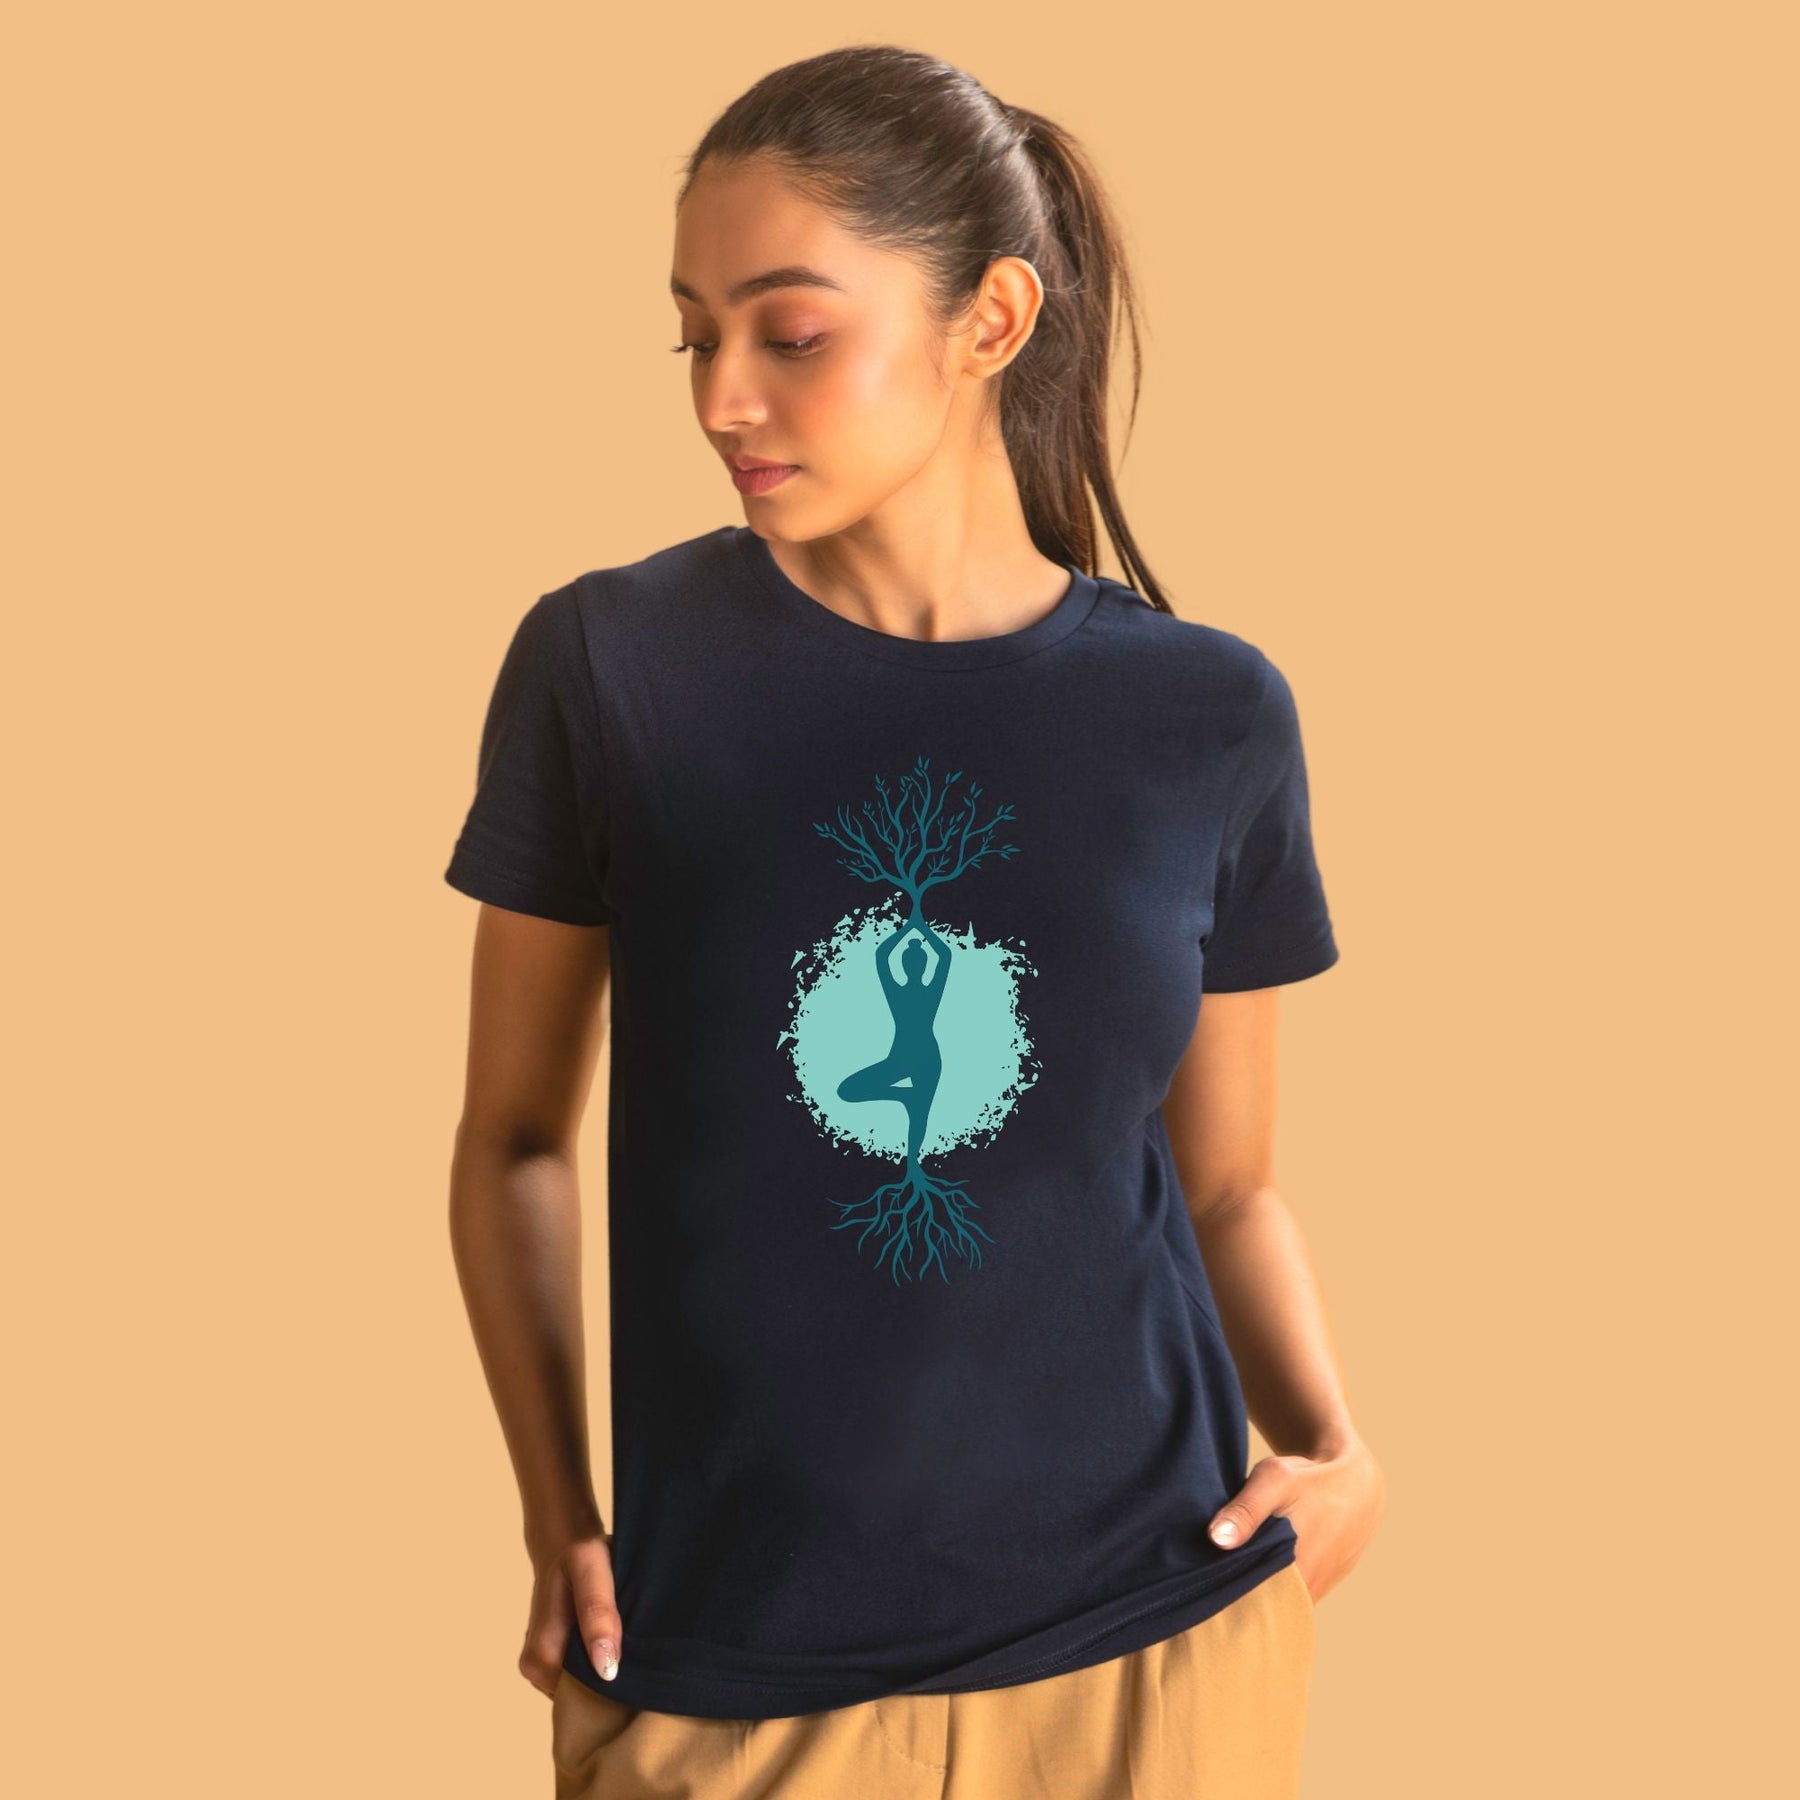 Yoga Tree Shirts Yoga Tank Tops for Women Yoga Exercise Shirts